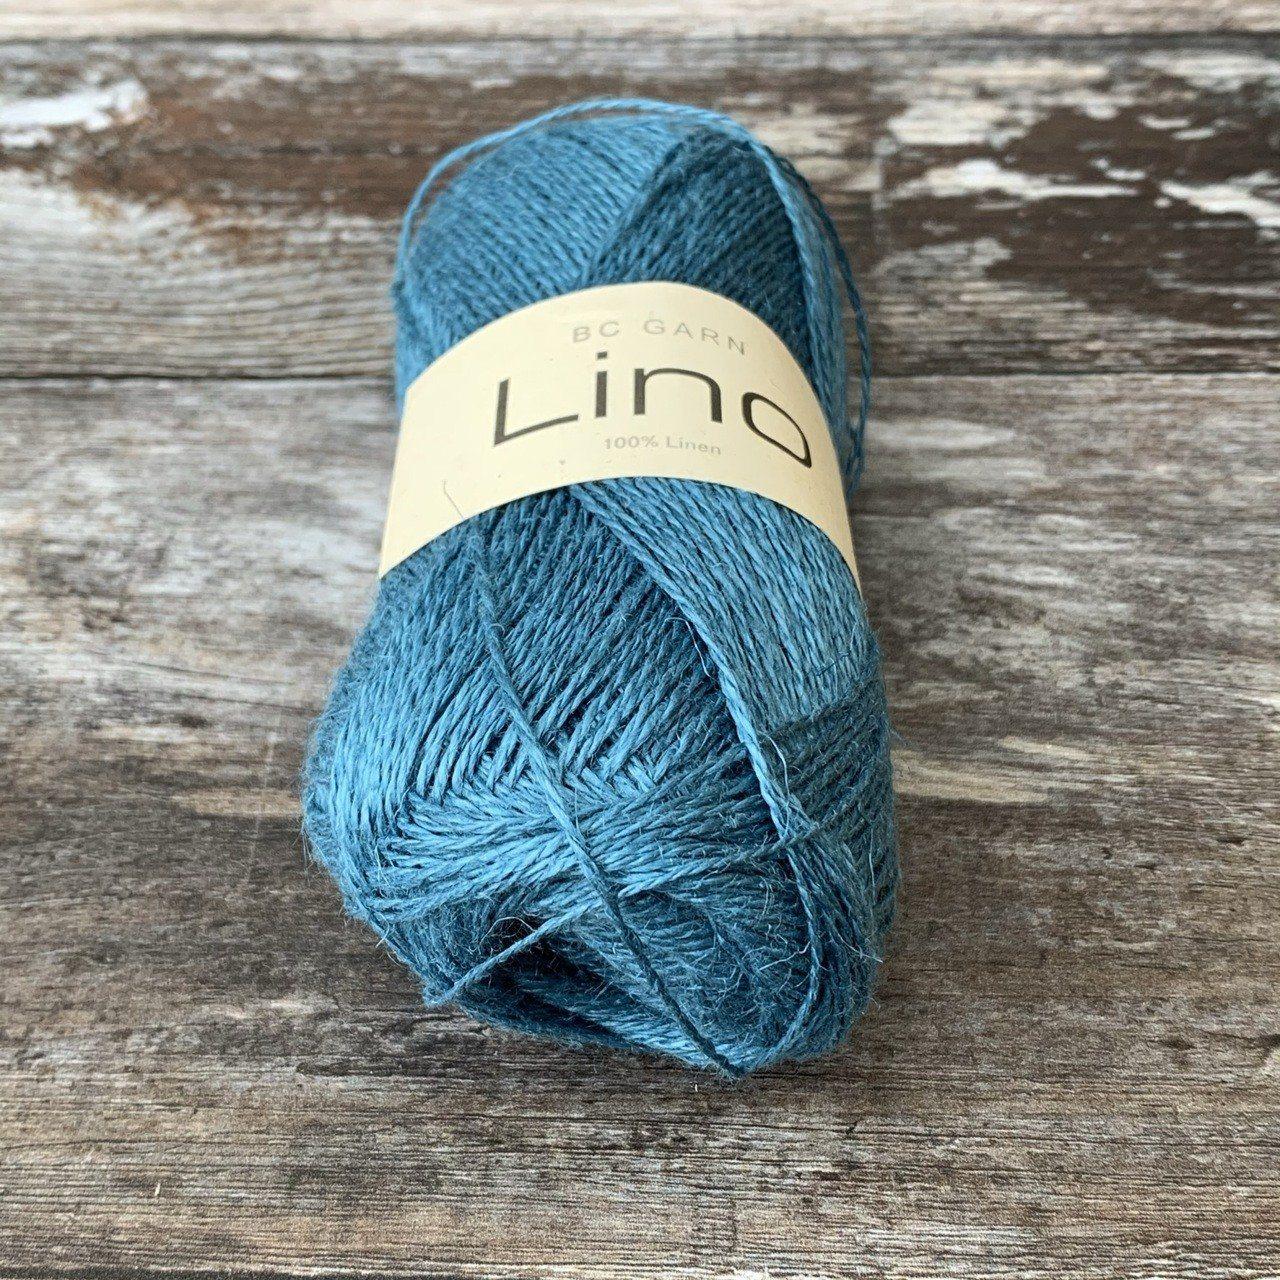 BC Garn BC Garn Lino - Petrol (51) - 4ply Knitting Yarn